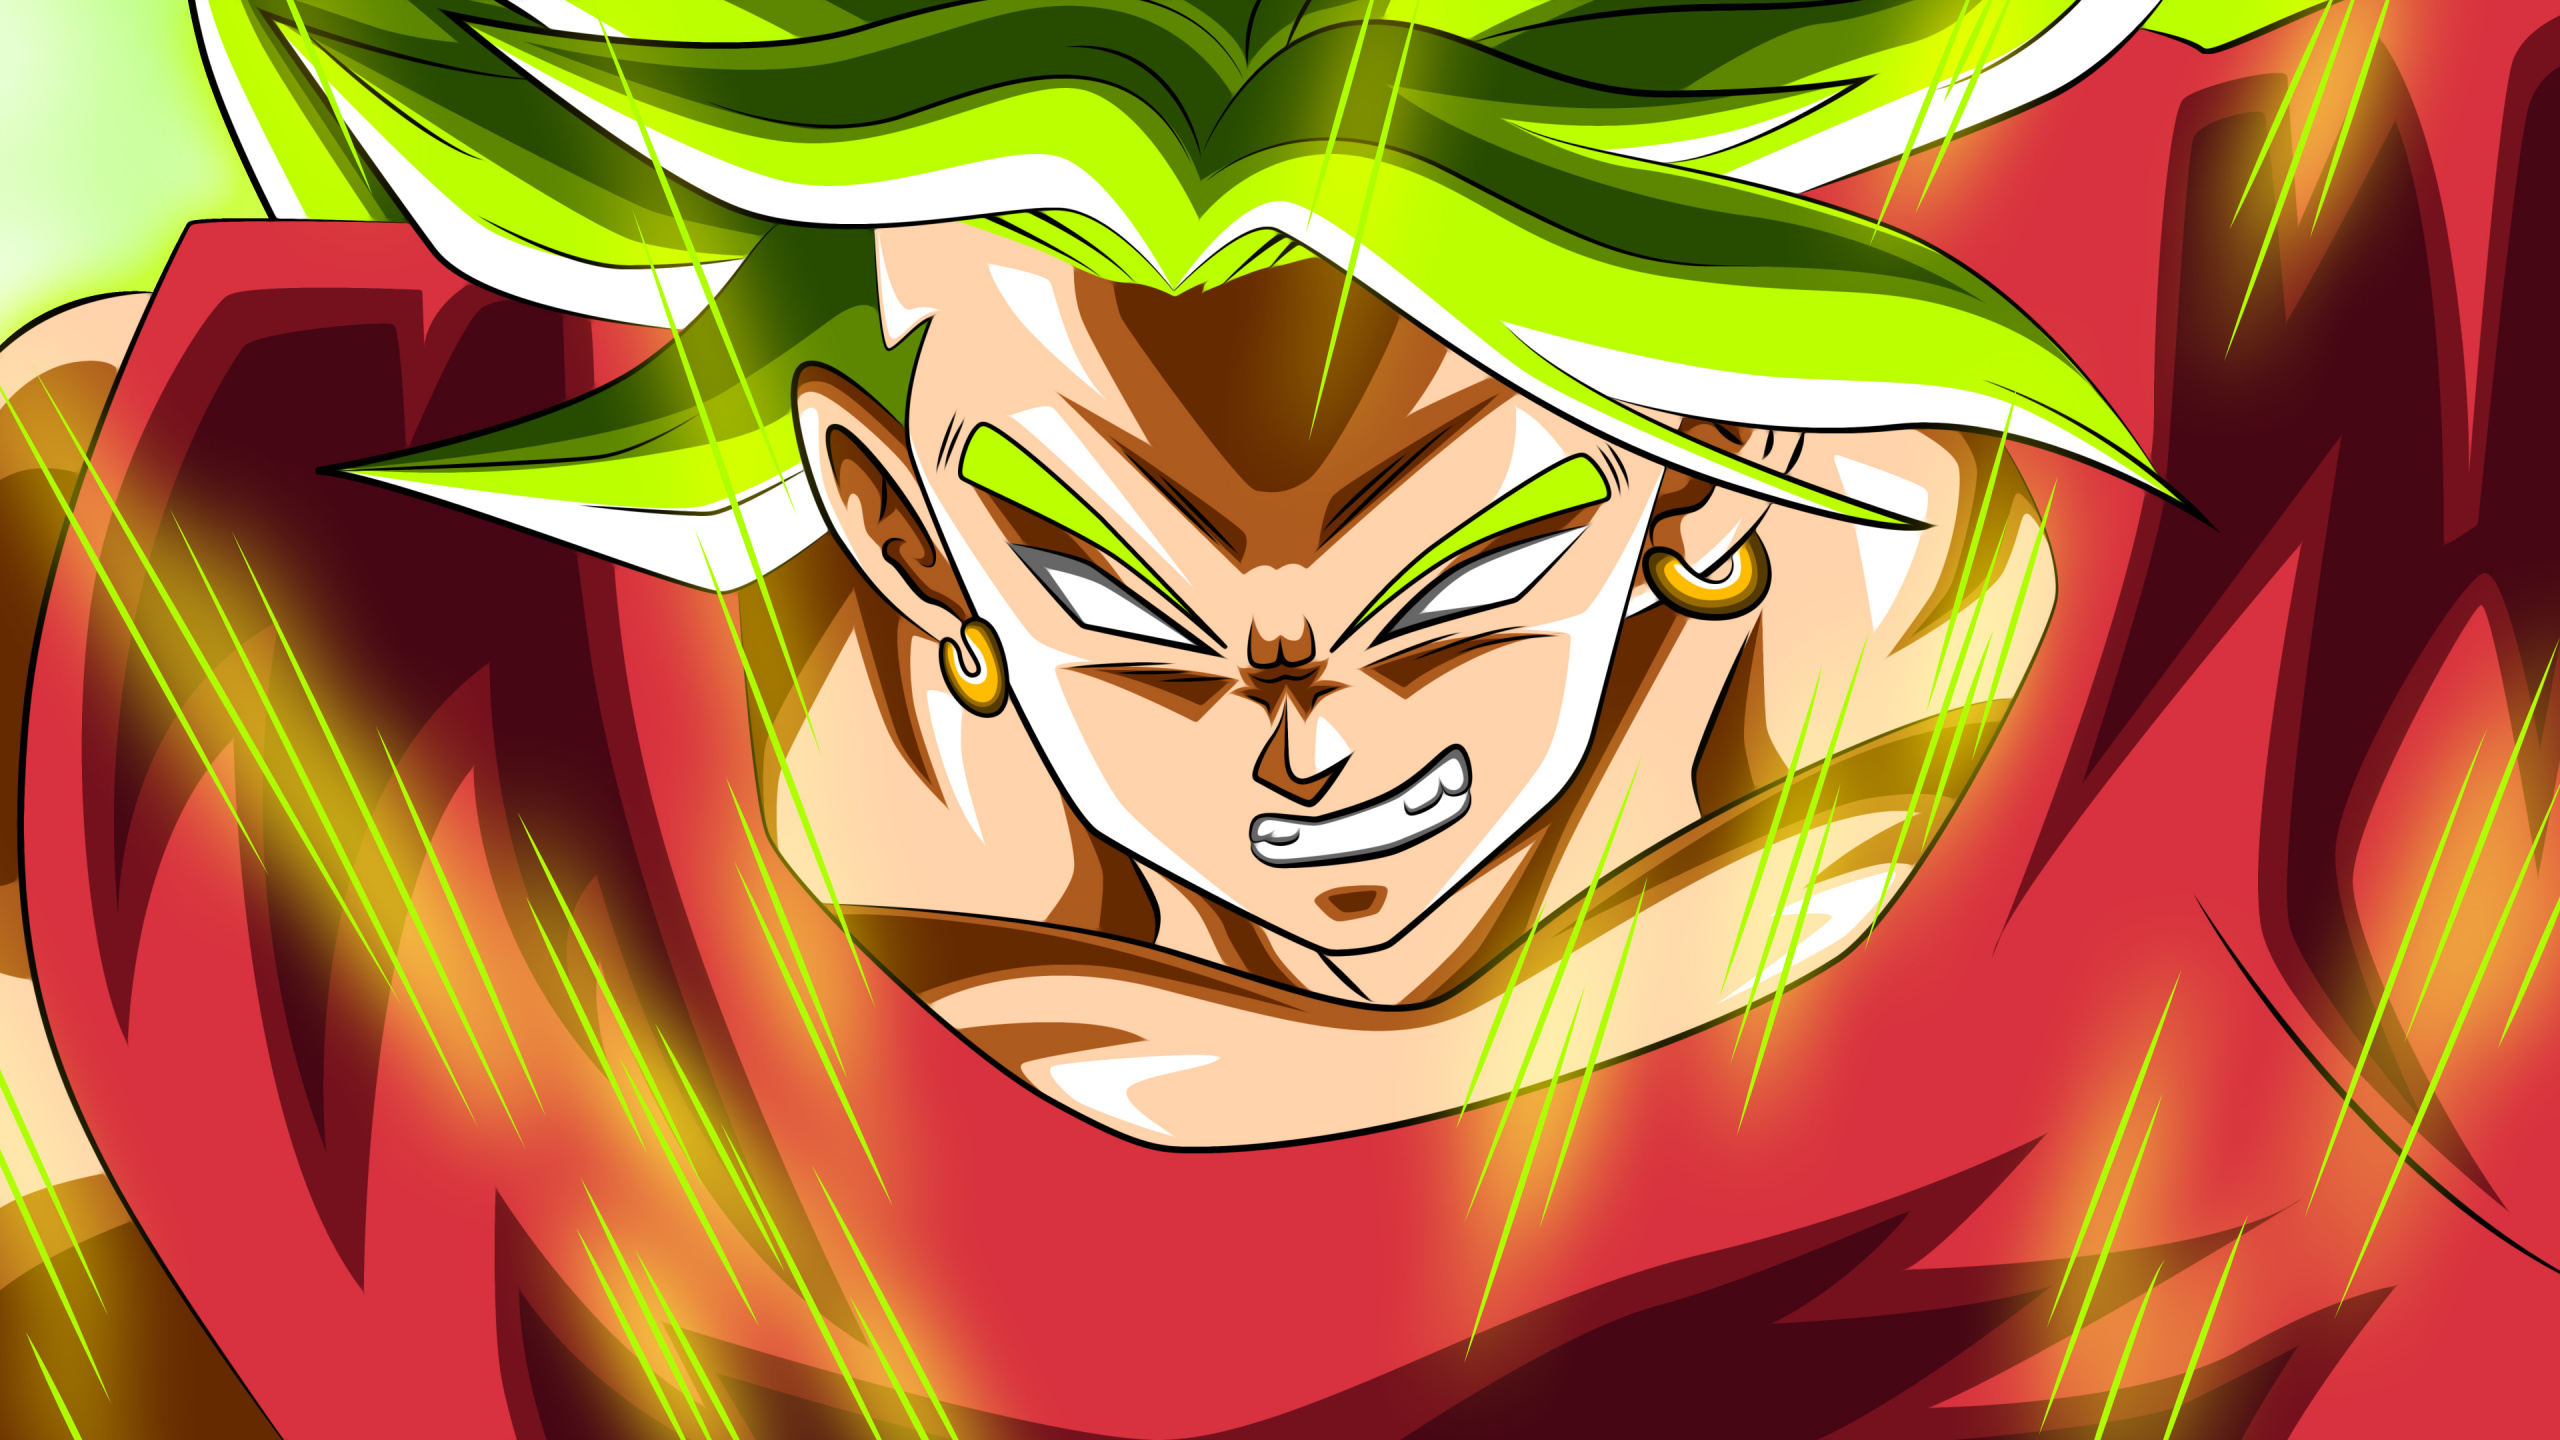 Personaje de Anime Masculino de Pelo Verde y Rojo. Wallpaper in 2560x1440 Resolution